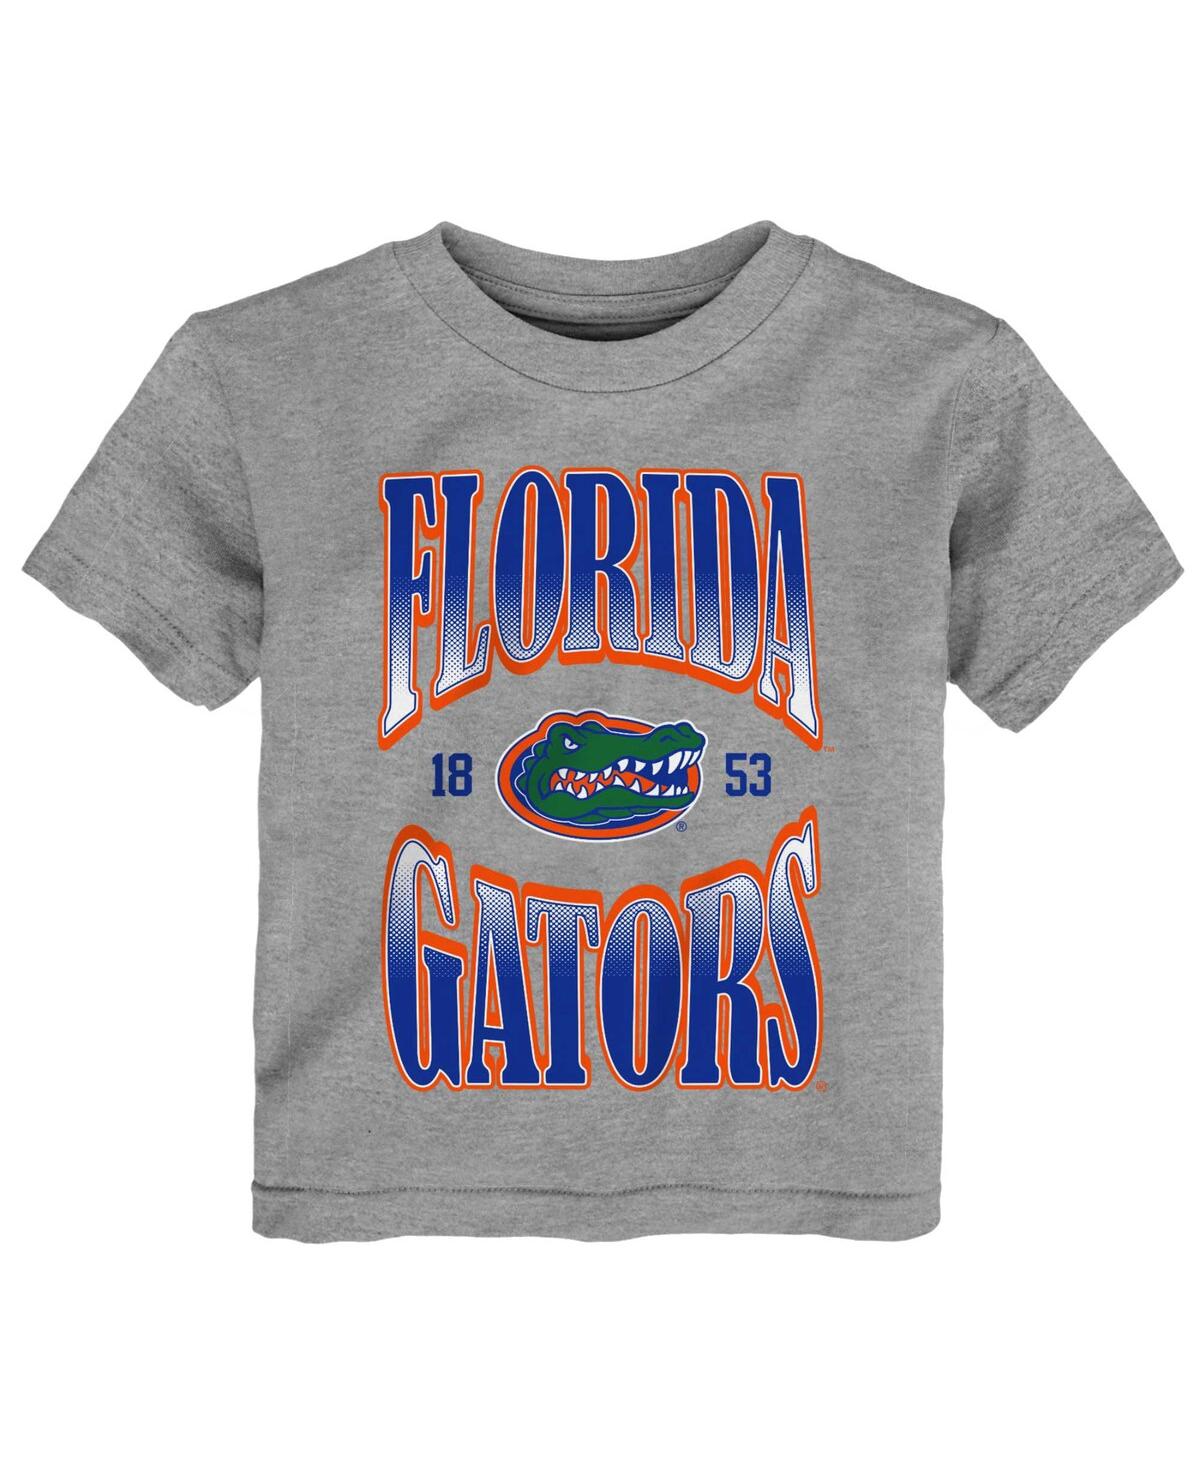 Outerstuff Babies' Toddler Boys And Girls Heather Gray Florida Gators Top Class T-shirt